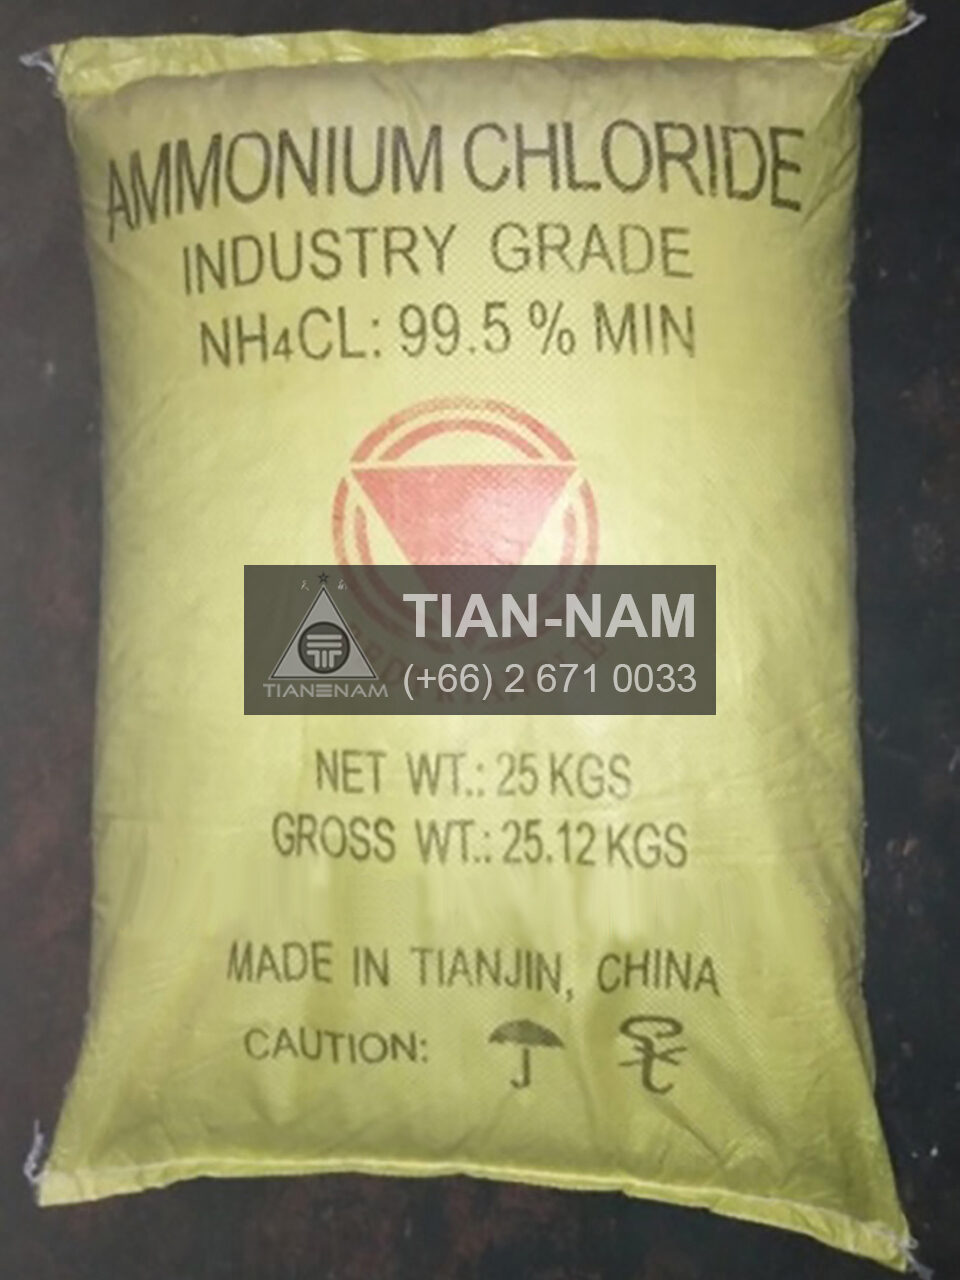 Ammonium Chloride China แอมโมเนียม คลอไรด์ จีน